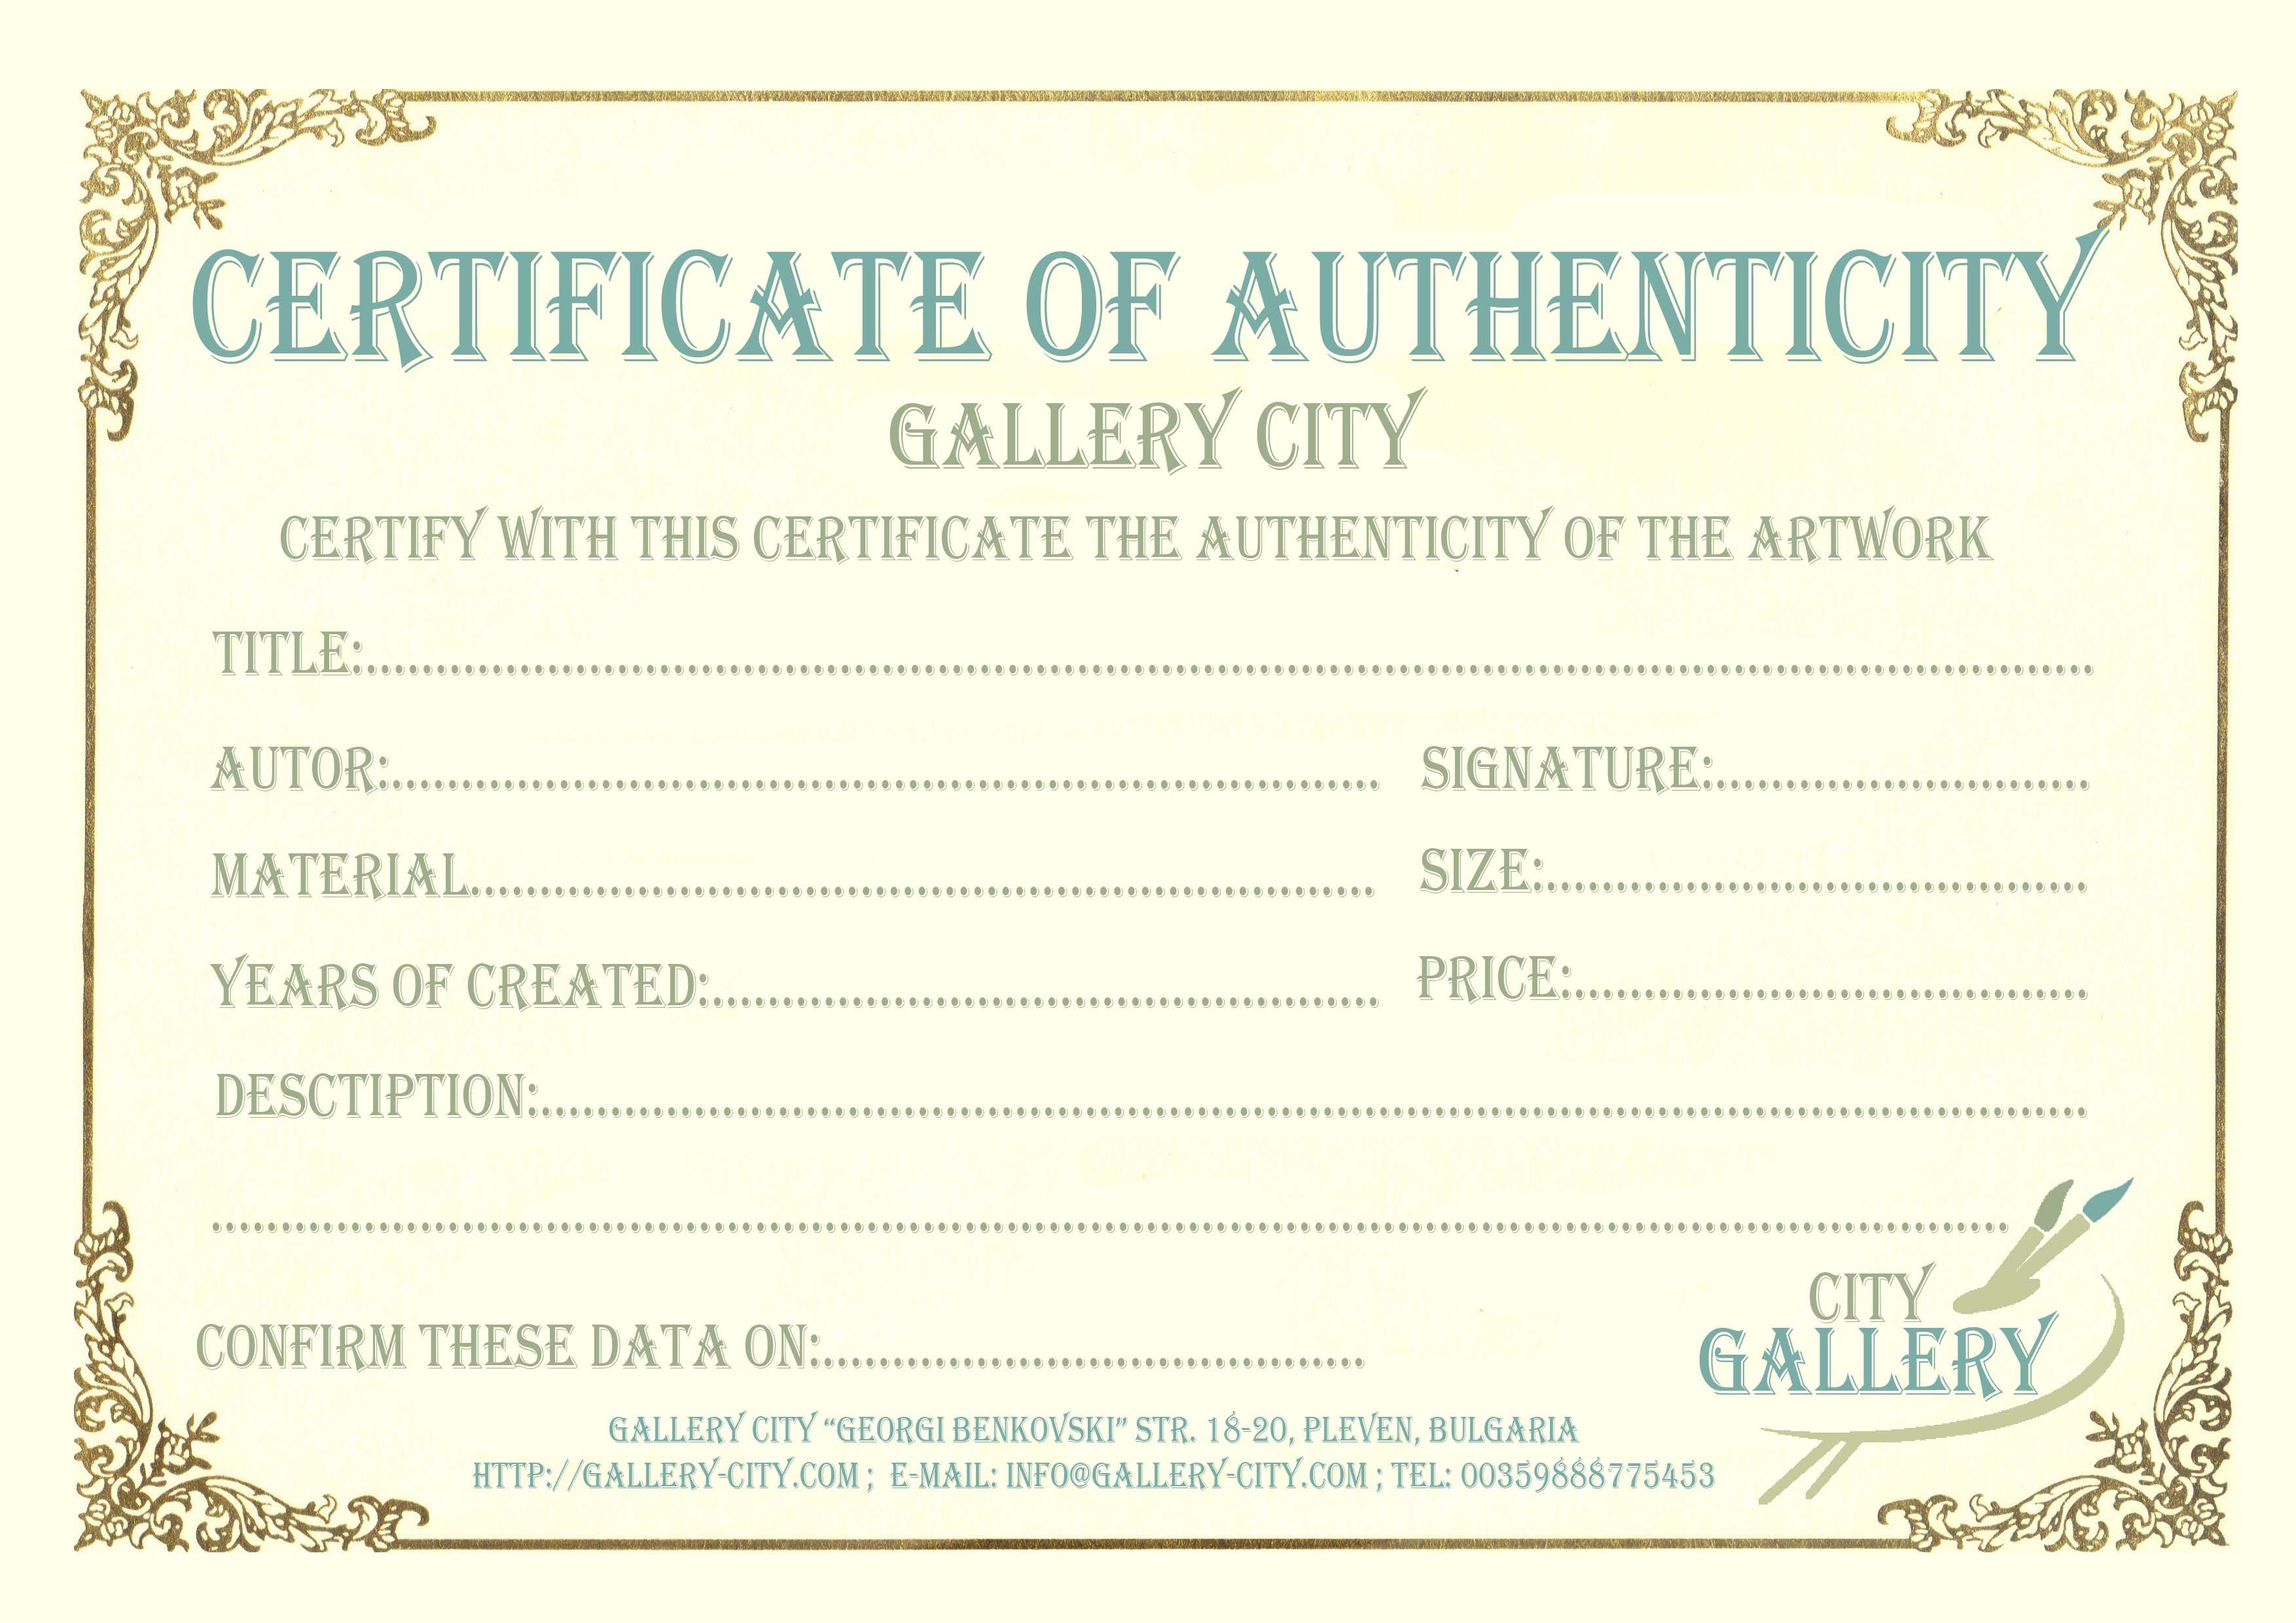 Authenticity Certificate Template freelasopa